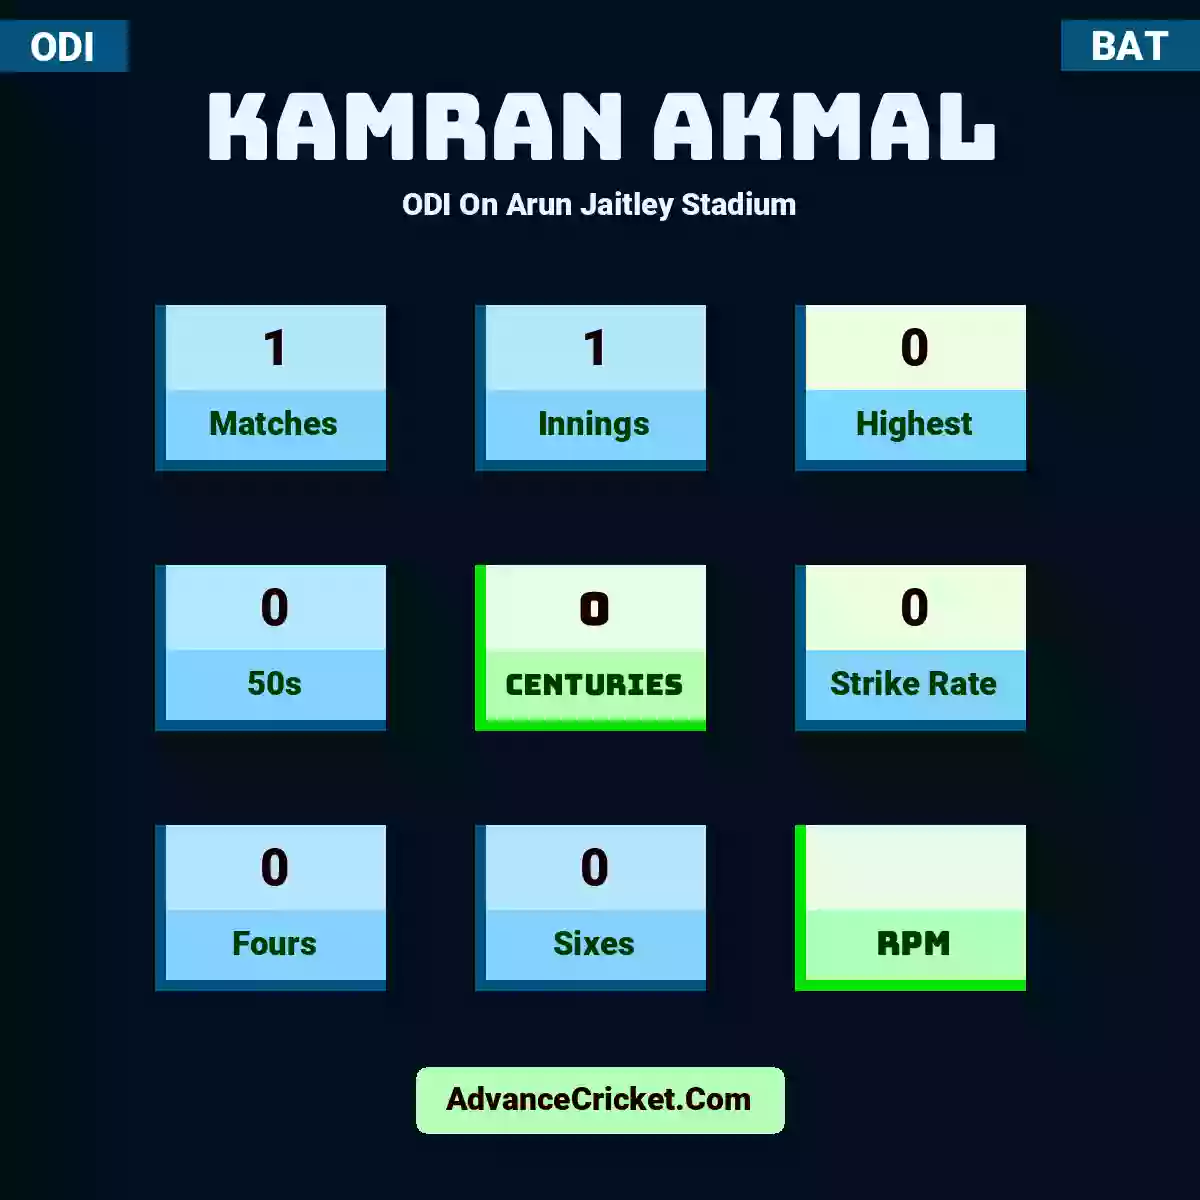 Kamran Akmal ODI  On Arun Jaitley Stadium, Kamran Akmal played 1 matches, scored 0 runs as highest, 0 half-centuries, and 0 centuries, with a strike rate of 0. K.Akmal hit 0 fours and 0 sixes.